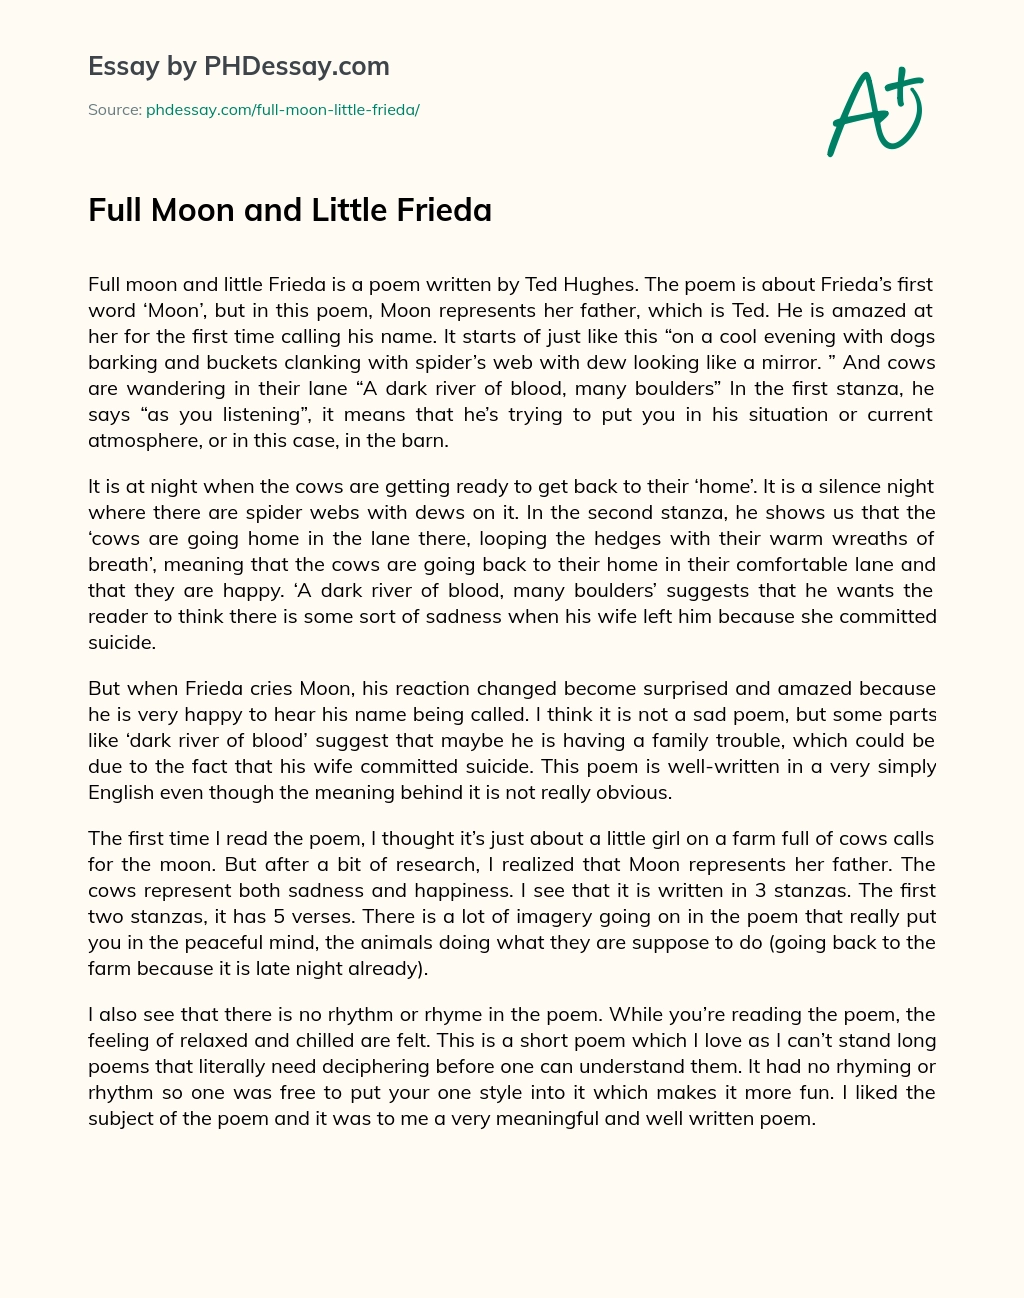 Full Moon and Little Frieda essay